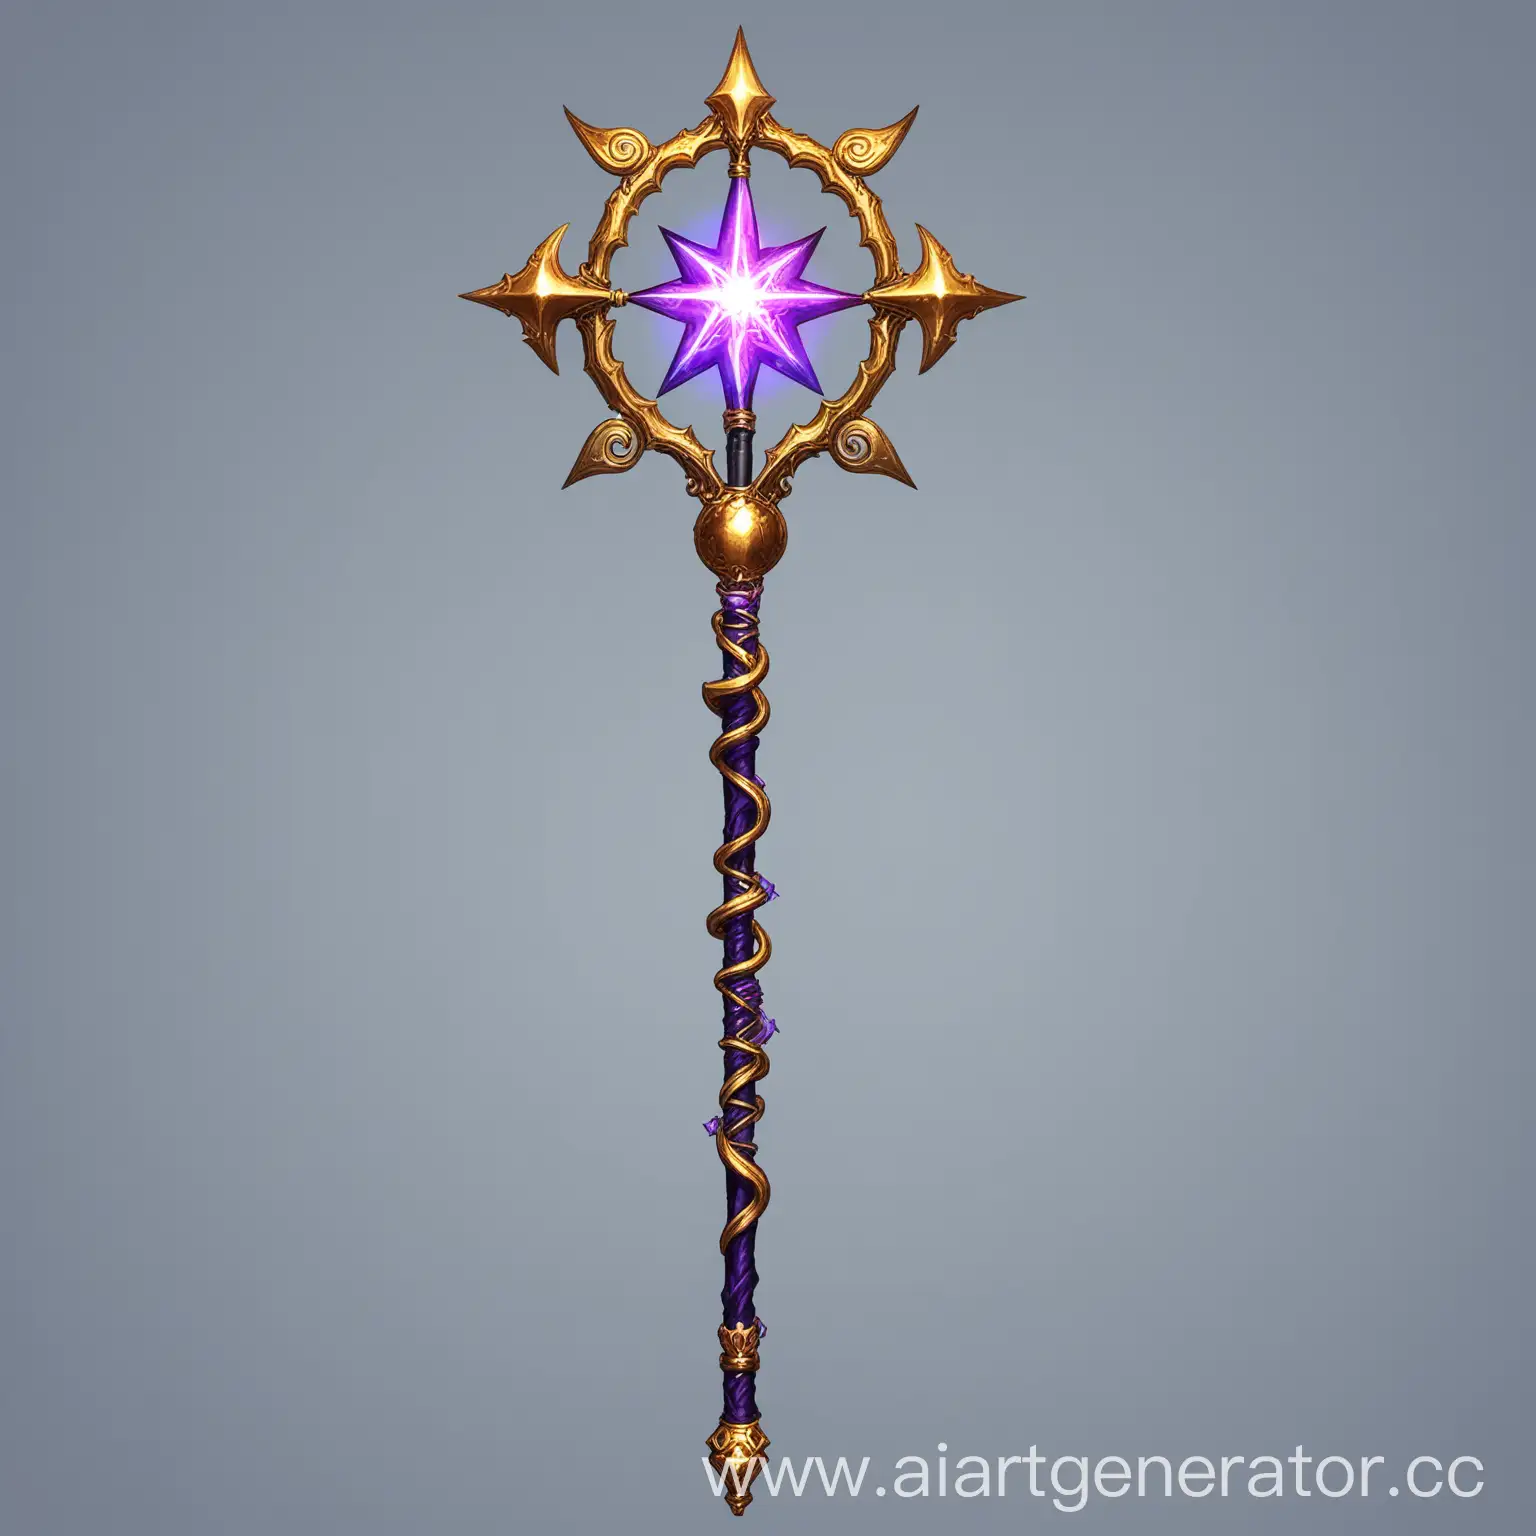 Mystical-Wizard-Holding-a-Glowing-Magic-Staff